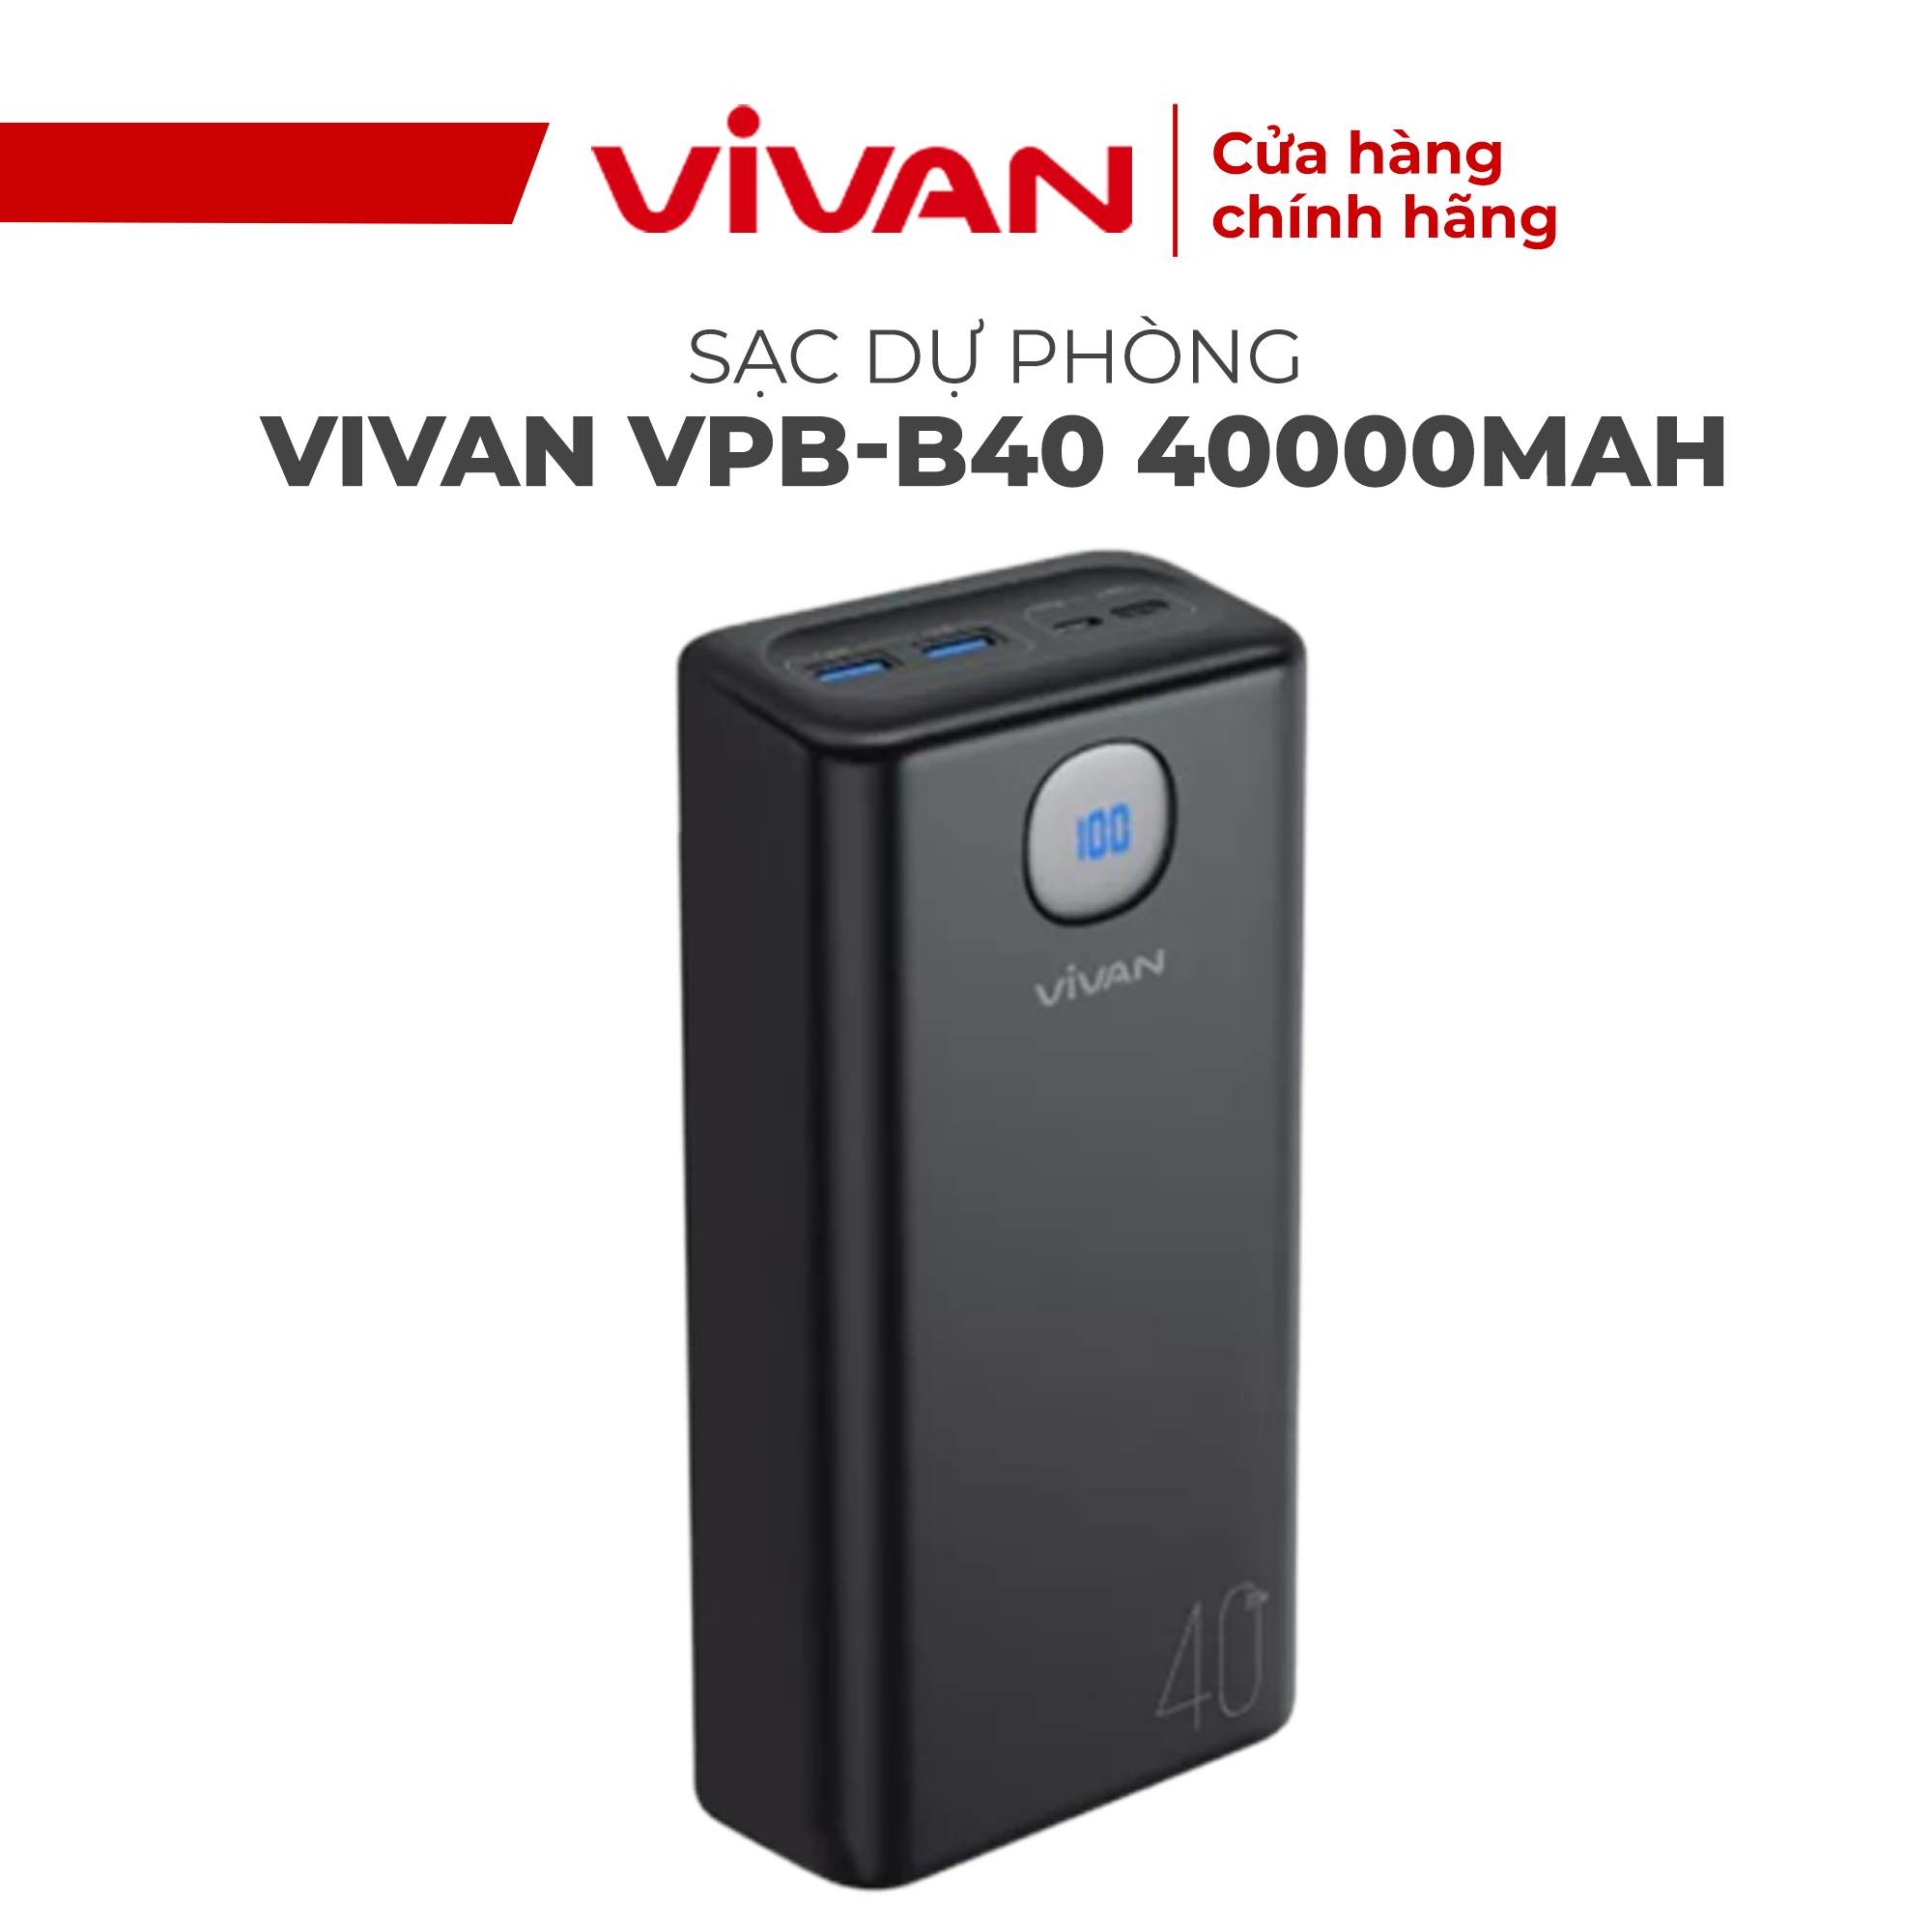 Battery Charger backup Vivan vpb-b40, capacity 40.000mAh